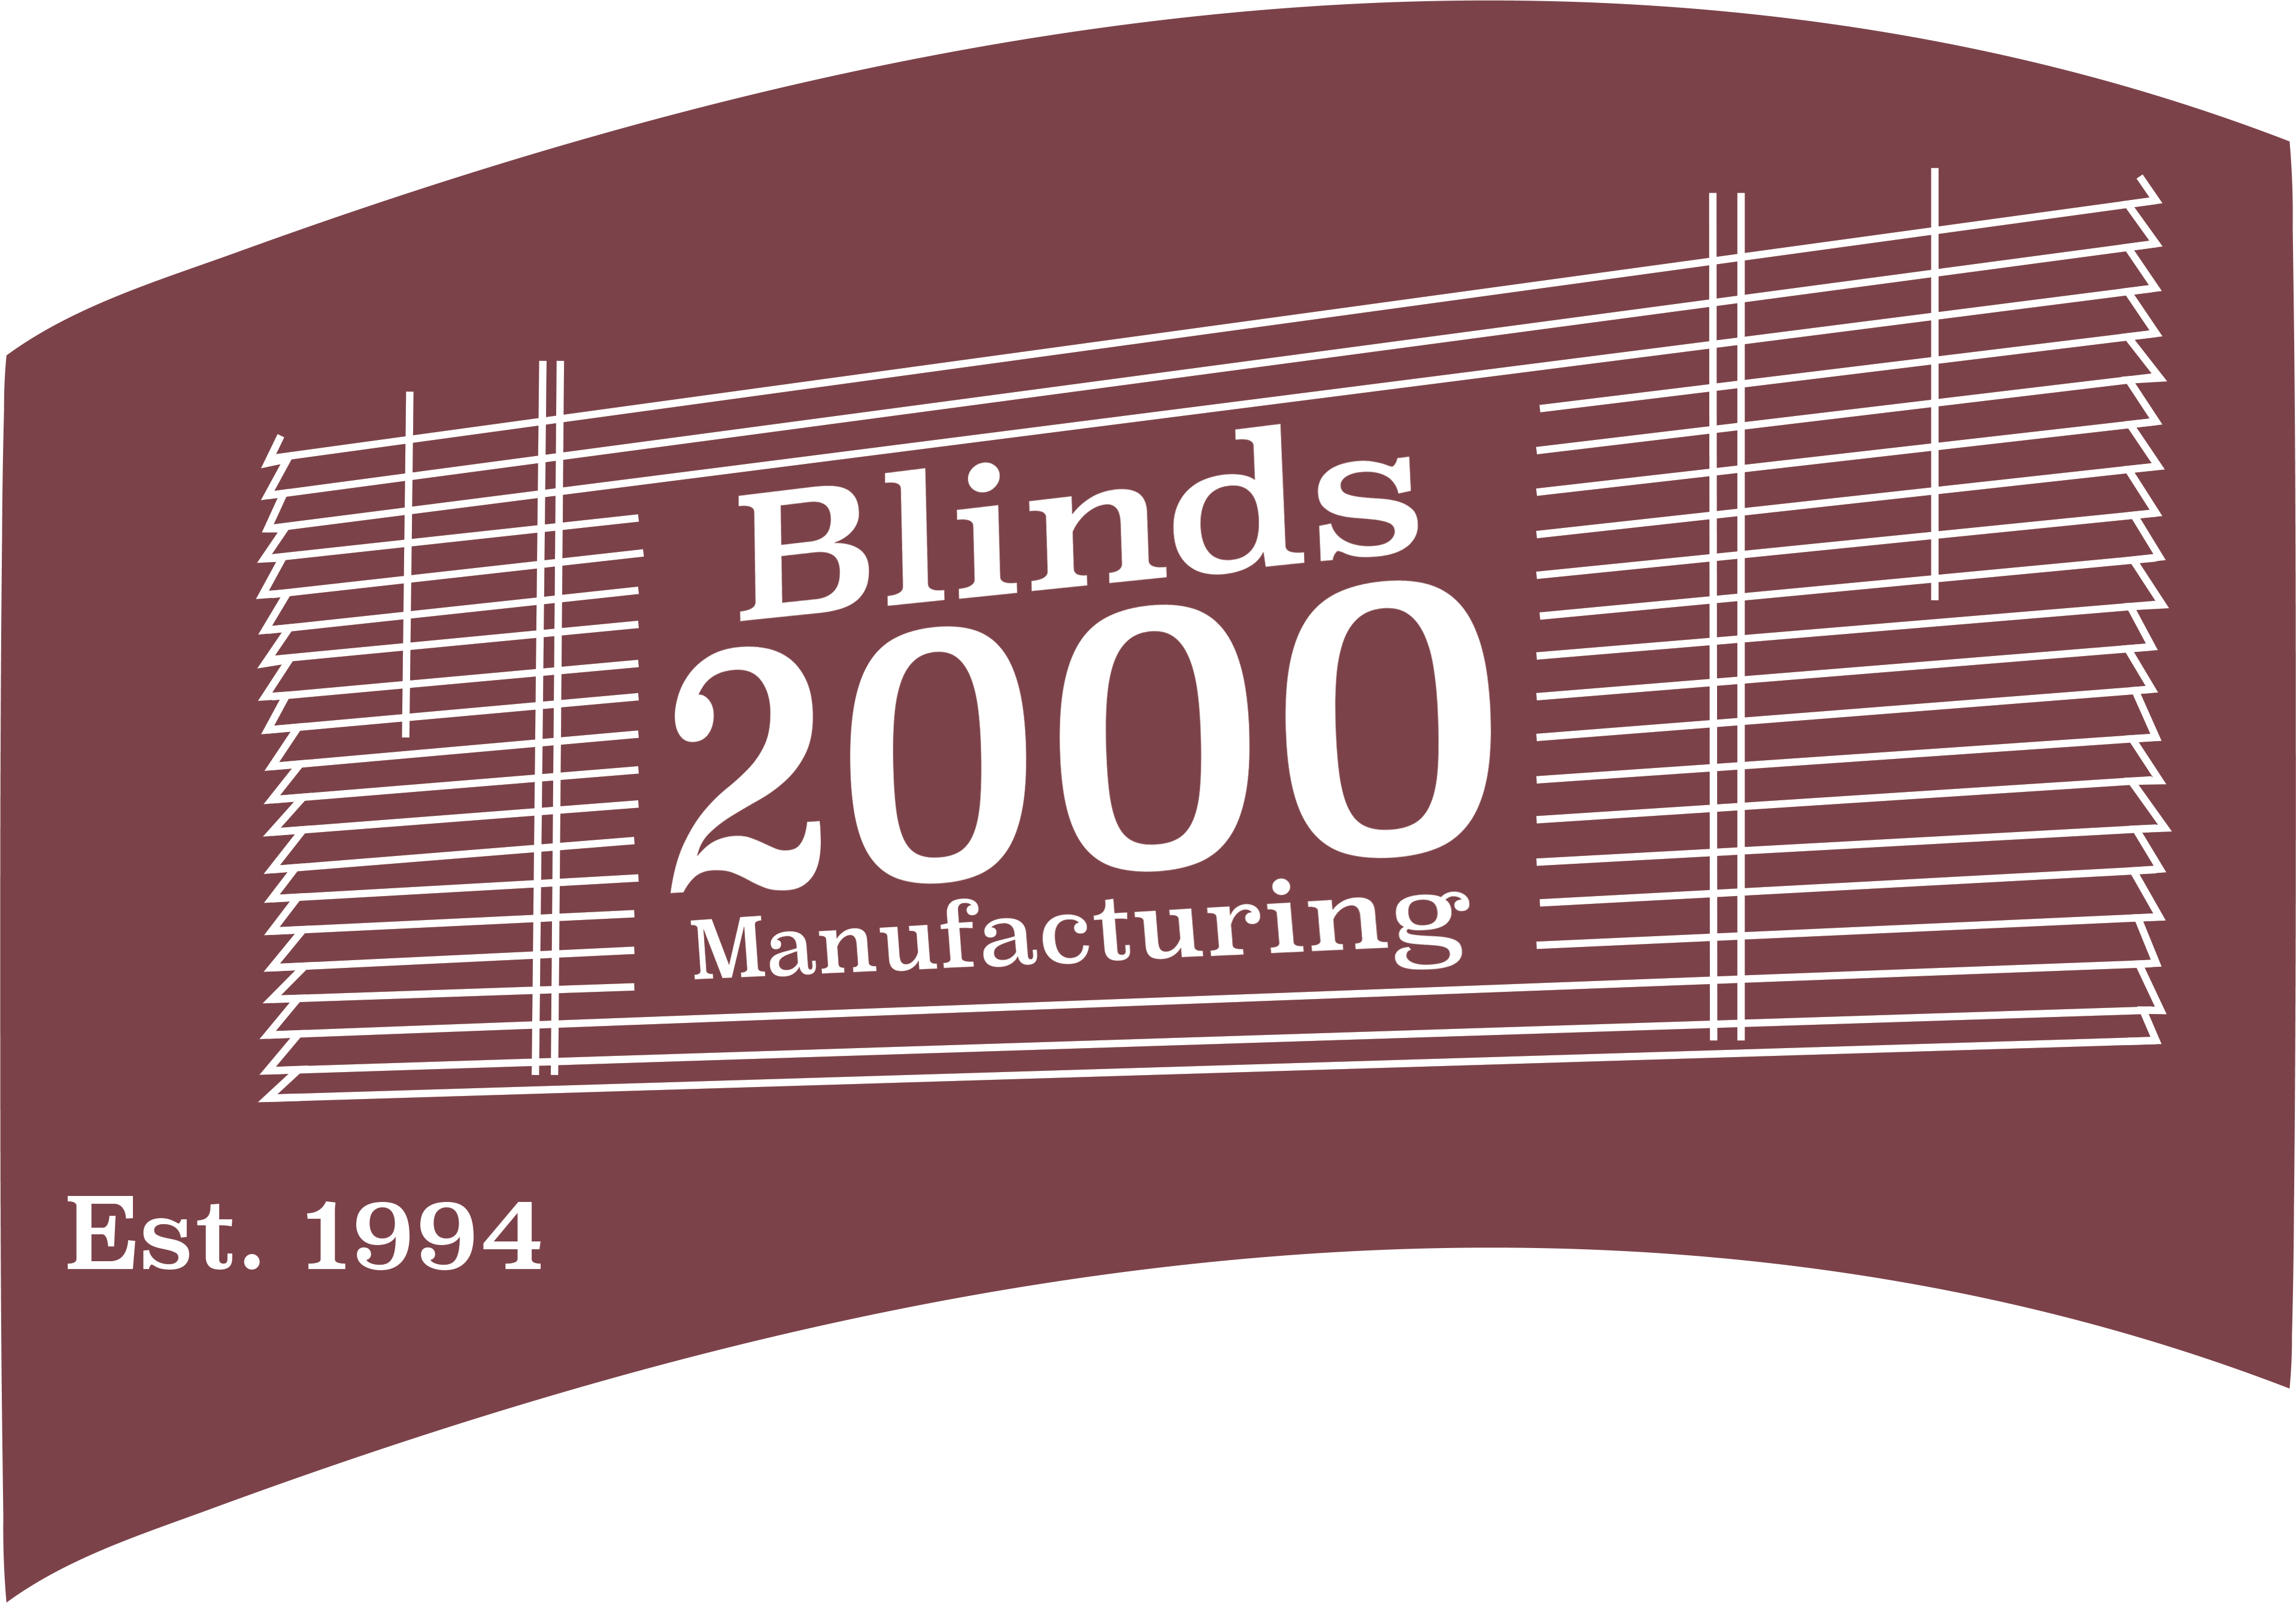 February MMS: Blinds 2000 Manufacturing Ltd.